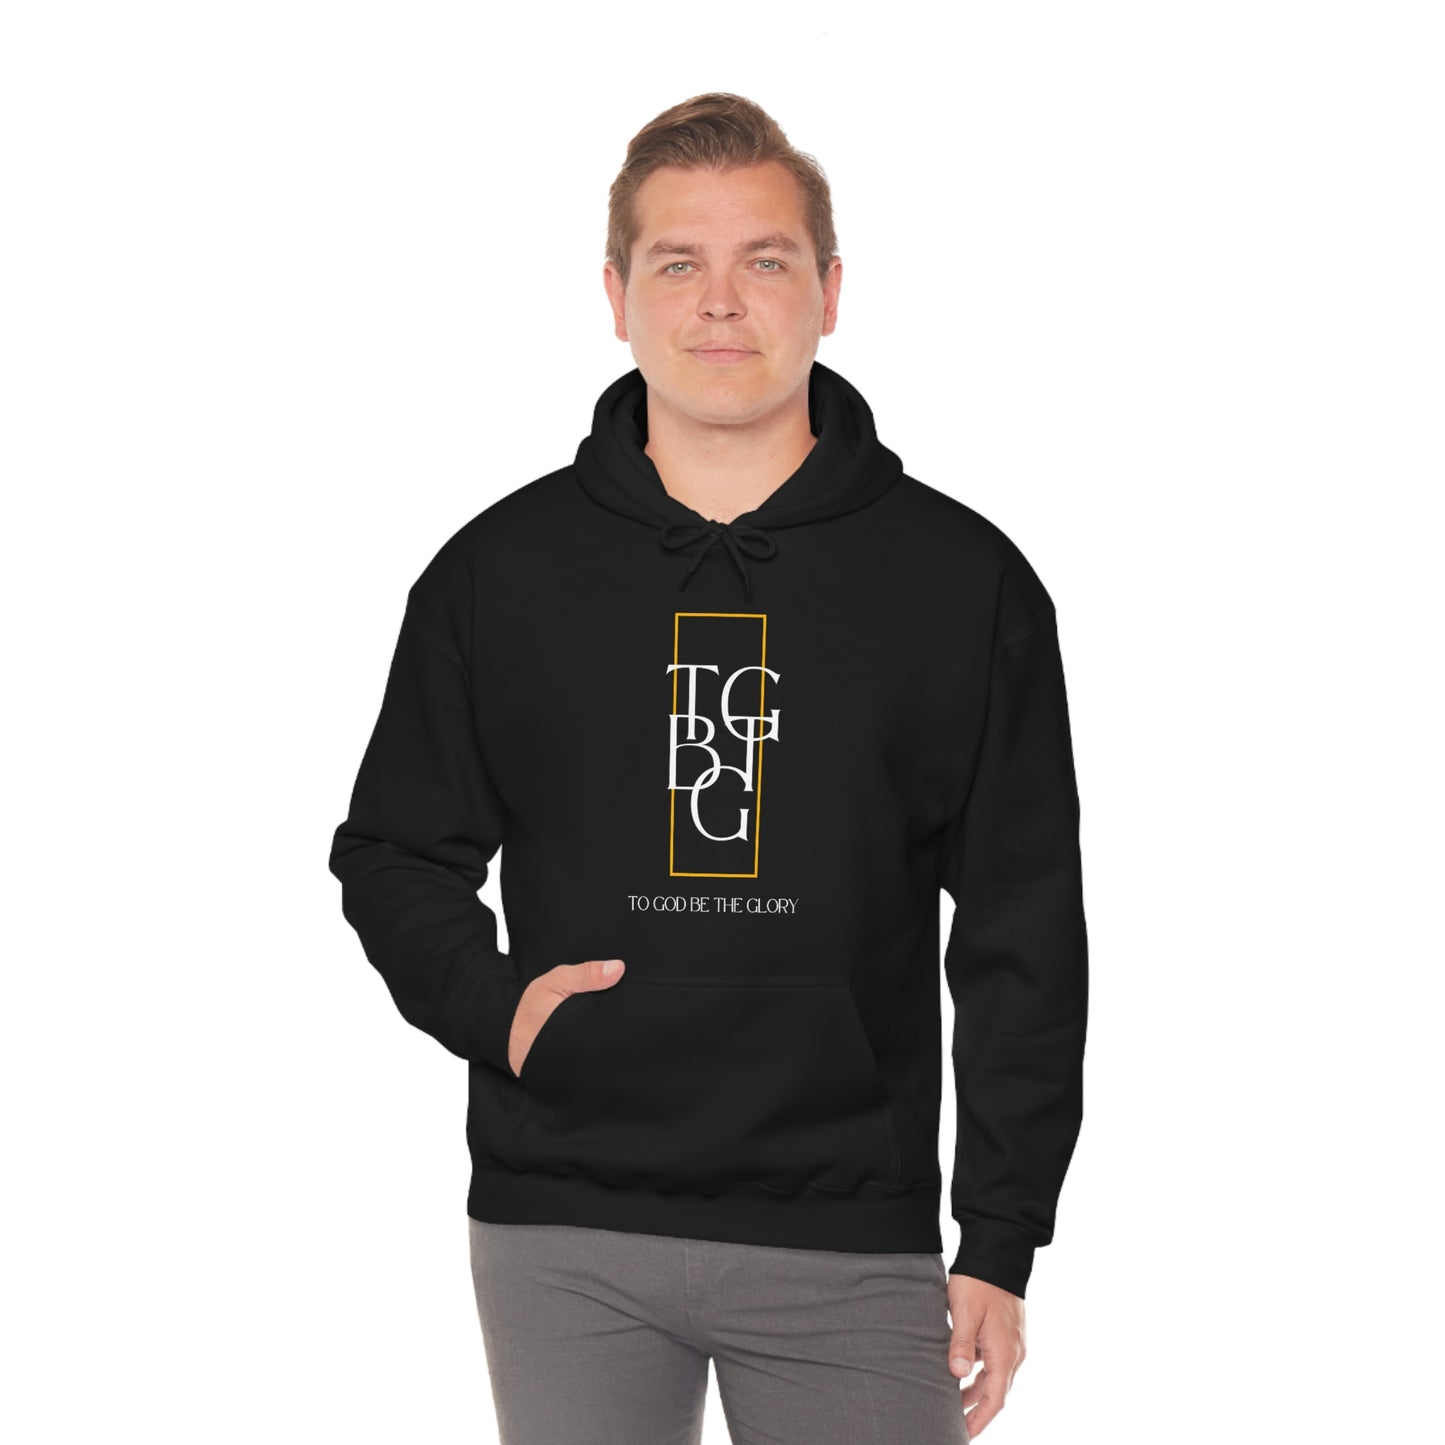 TGBTG Hooded Sweatshirt in Black